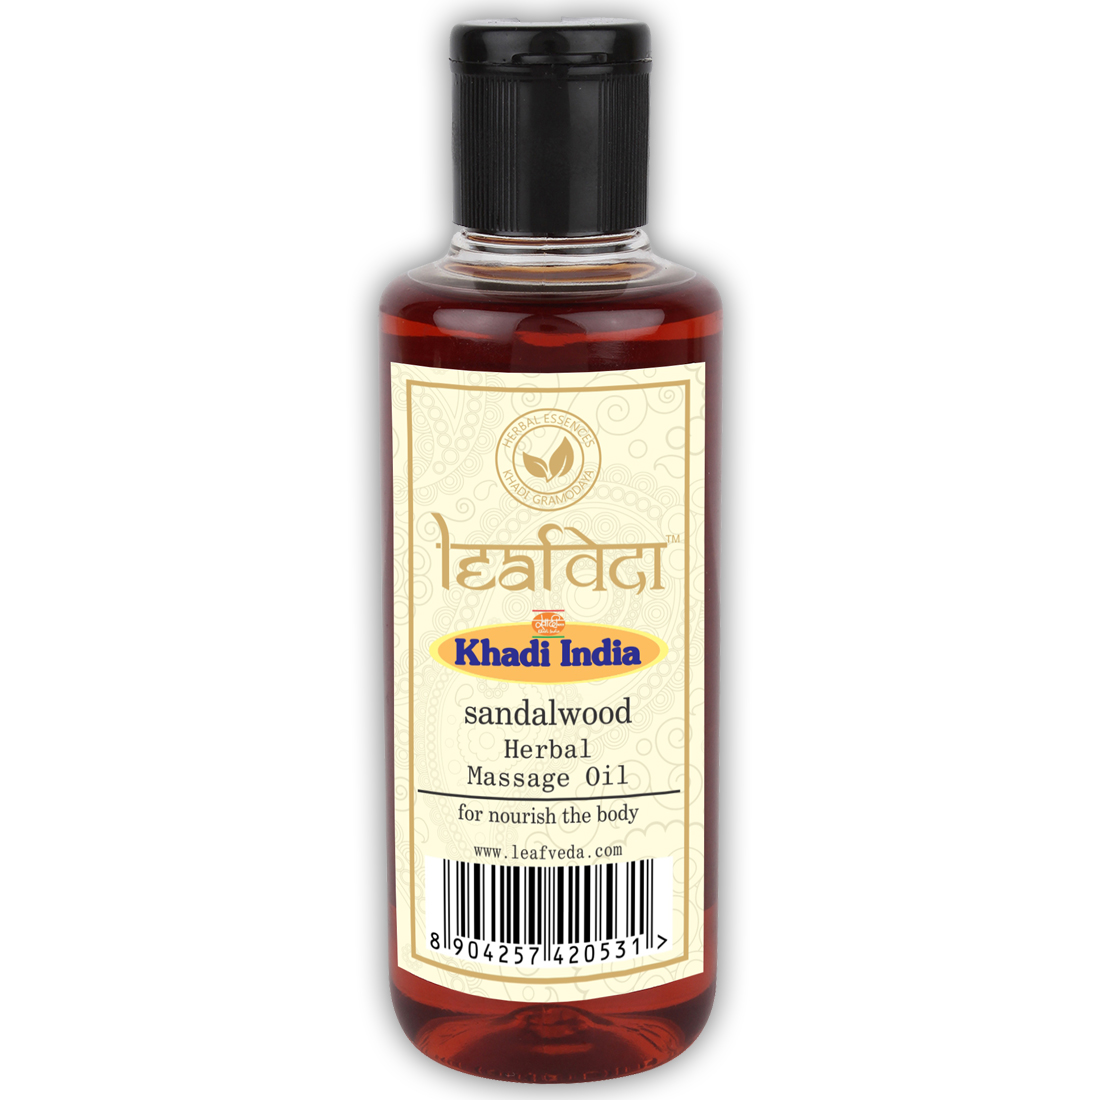 Buy Khadi Leafveda Sandalwood Massage Oil at Best Price Online